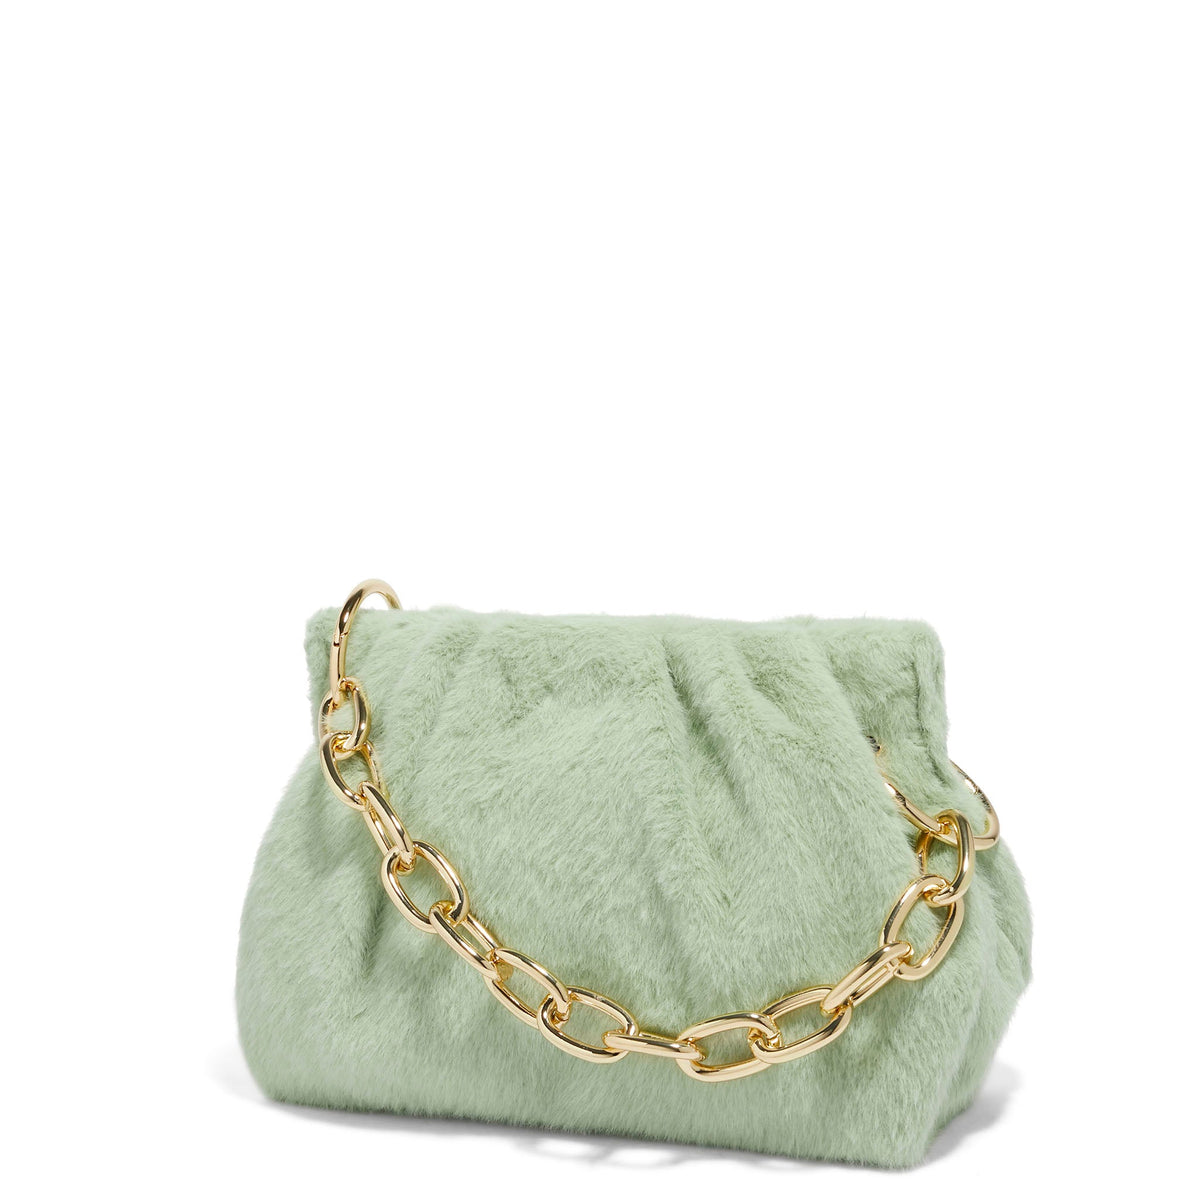 Bottega Veneta The Chain Pouch Bag in Racing Green & Gold